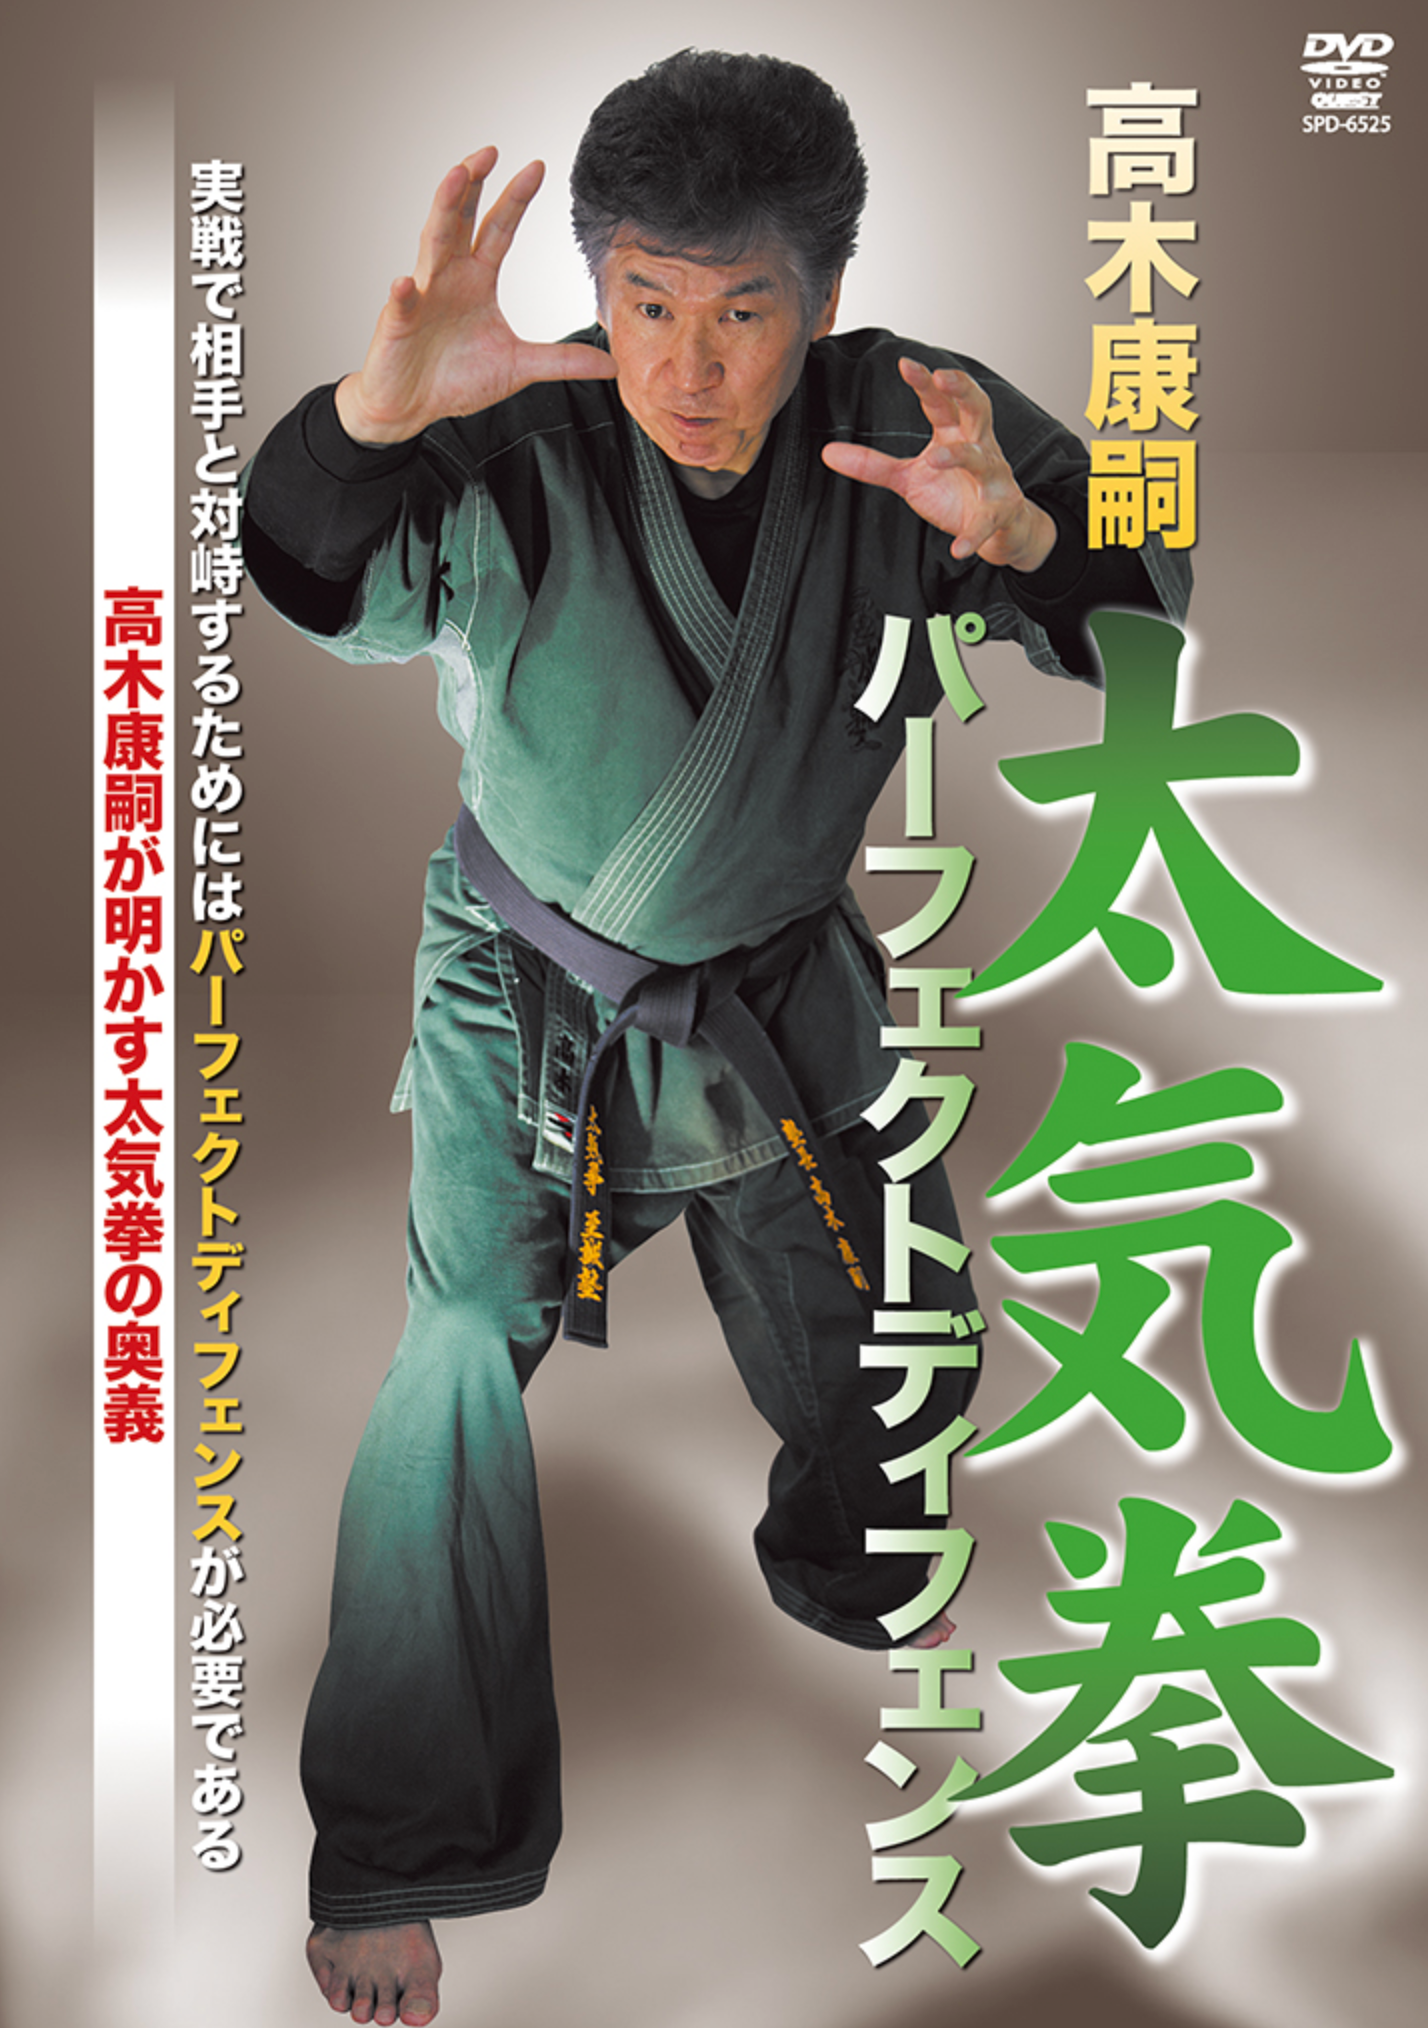 Tai Chi Chuan Perfect Defense DVD by Koji Takagi - Budovideos Inc